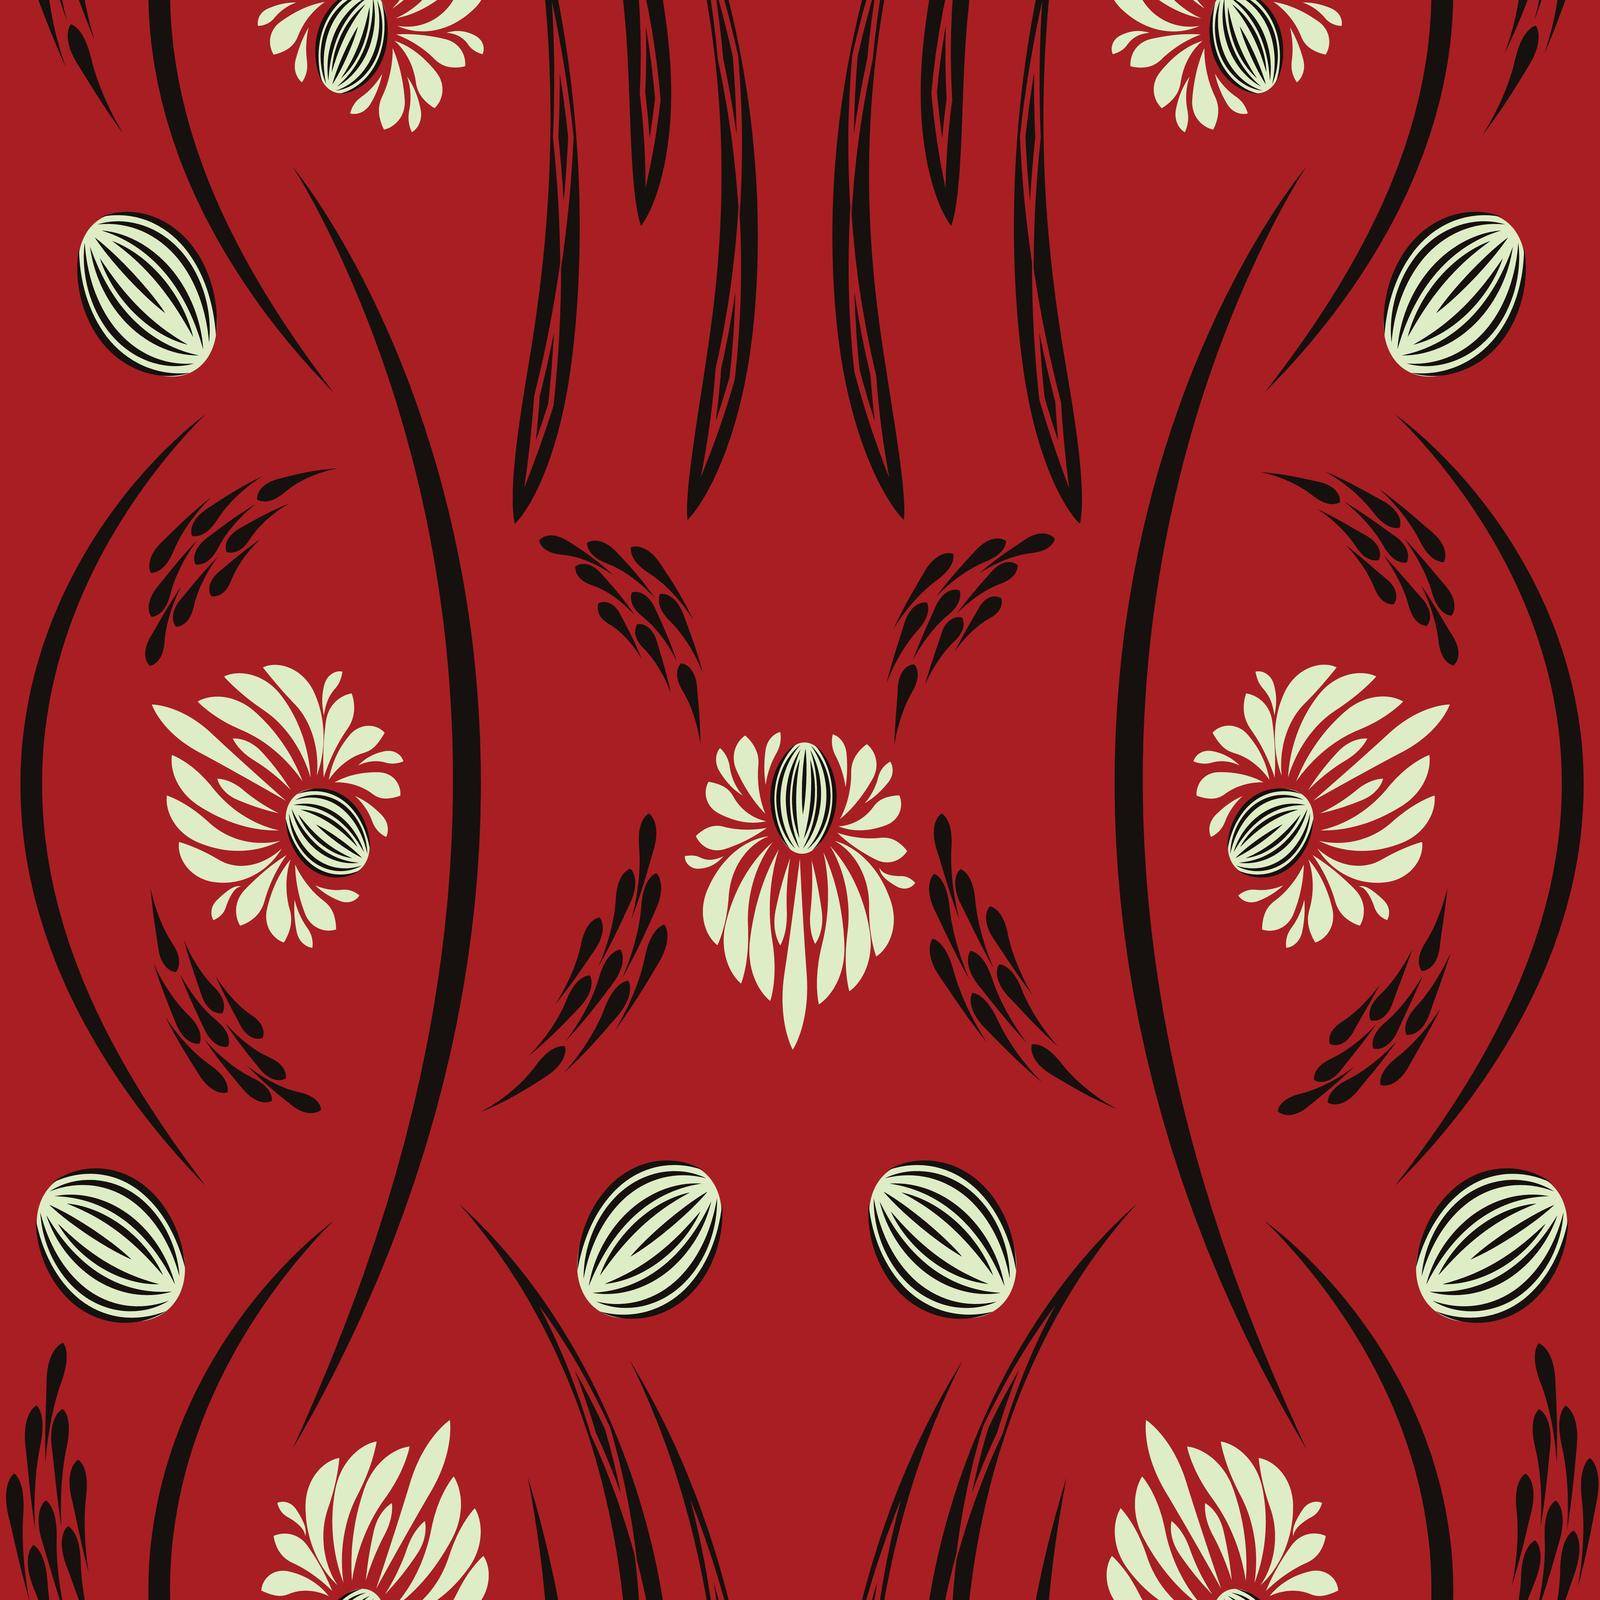 Folk flowers print Floral pattern Ethnic art by eskimos